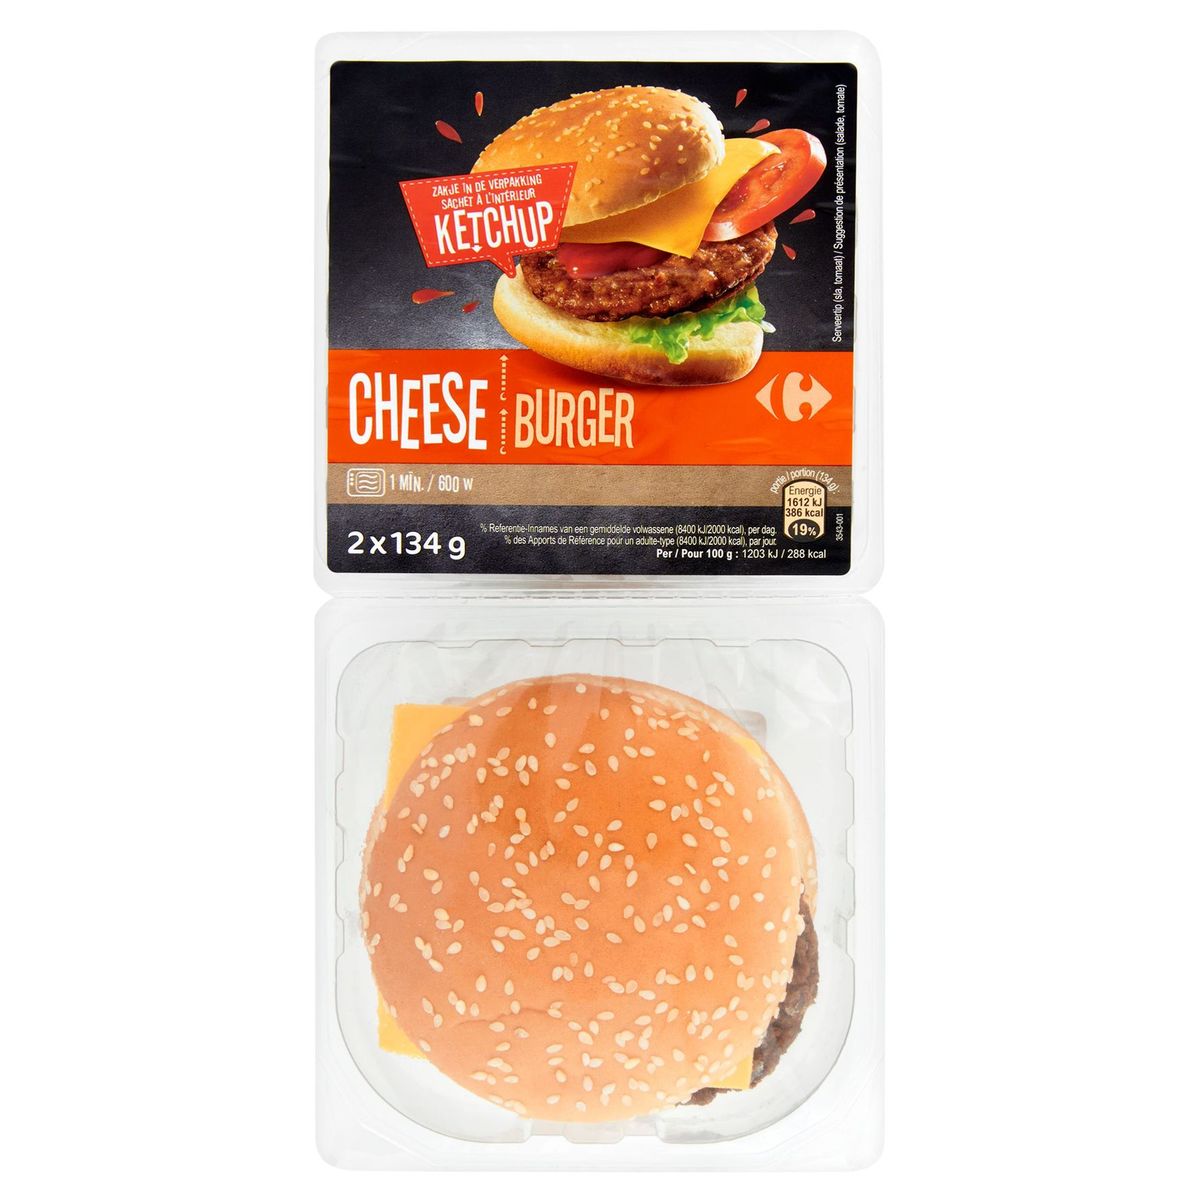 Pijler Katholiek in verlegenheid gebracht Carrefour Cheese Burger 2 x 134 g | Carrefour Site